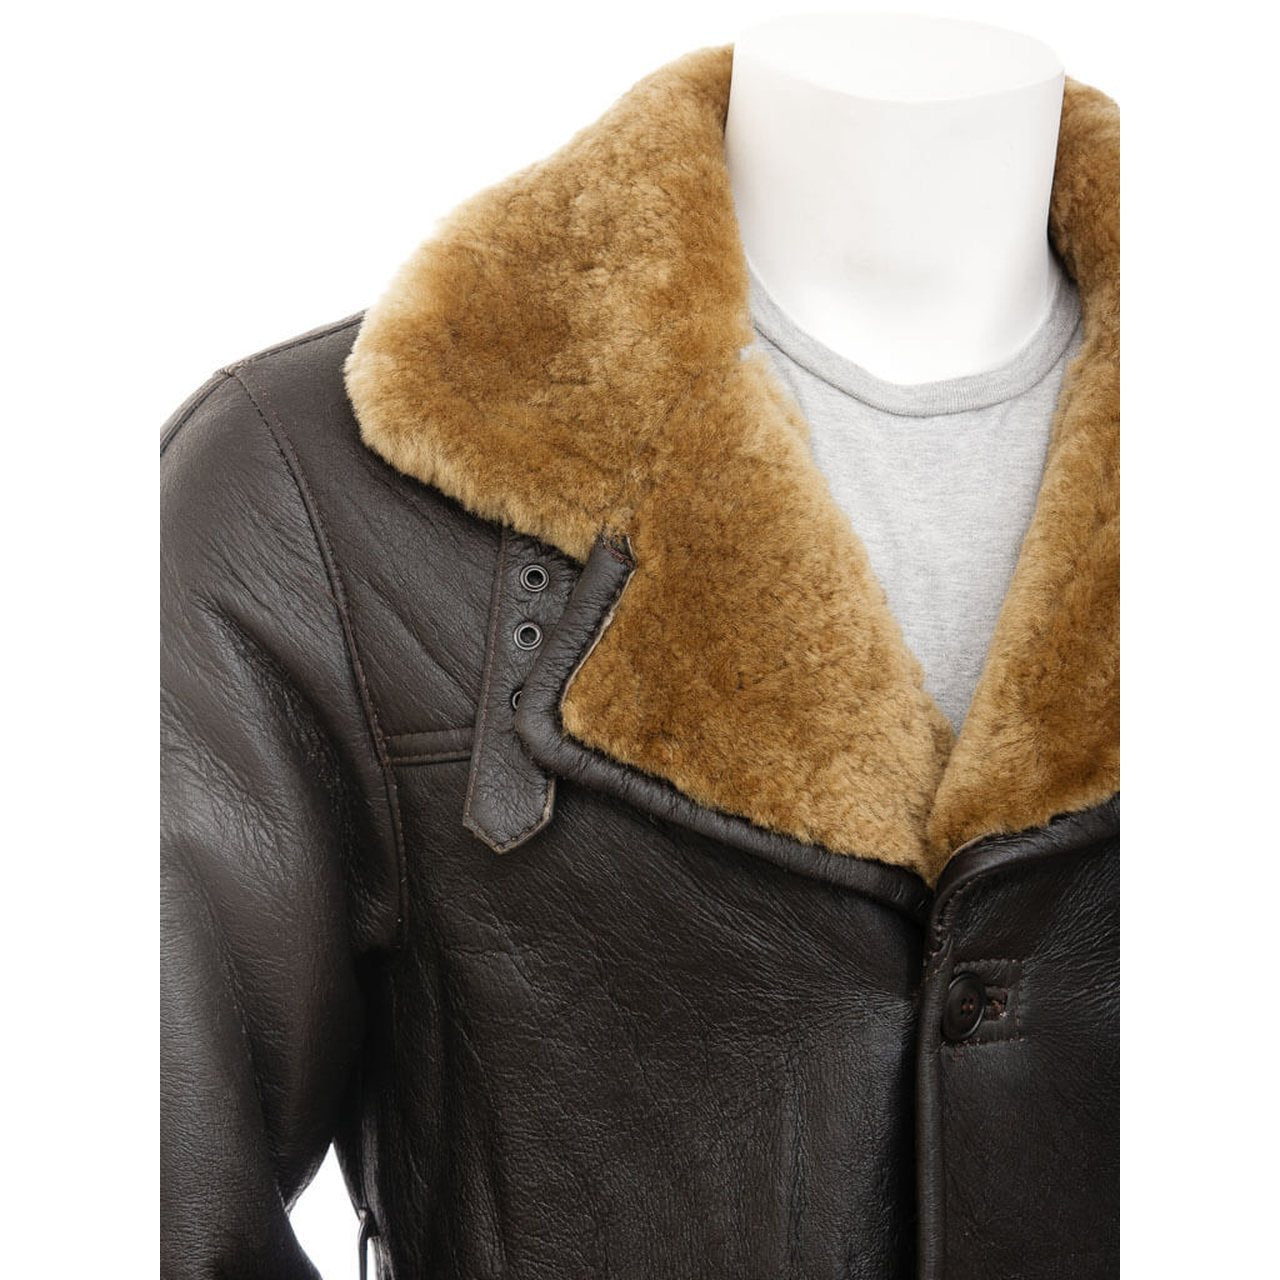 Dark Brown Shearling Leather Coat Men - Leather Jacket